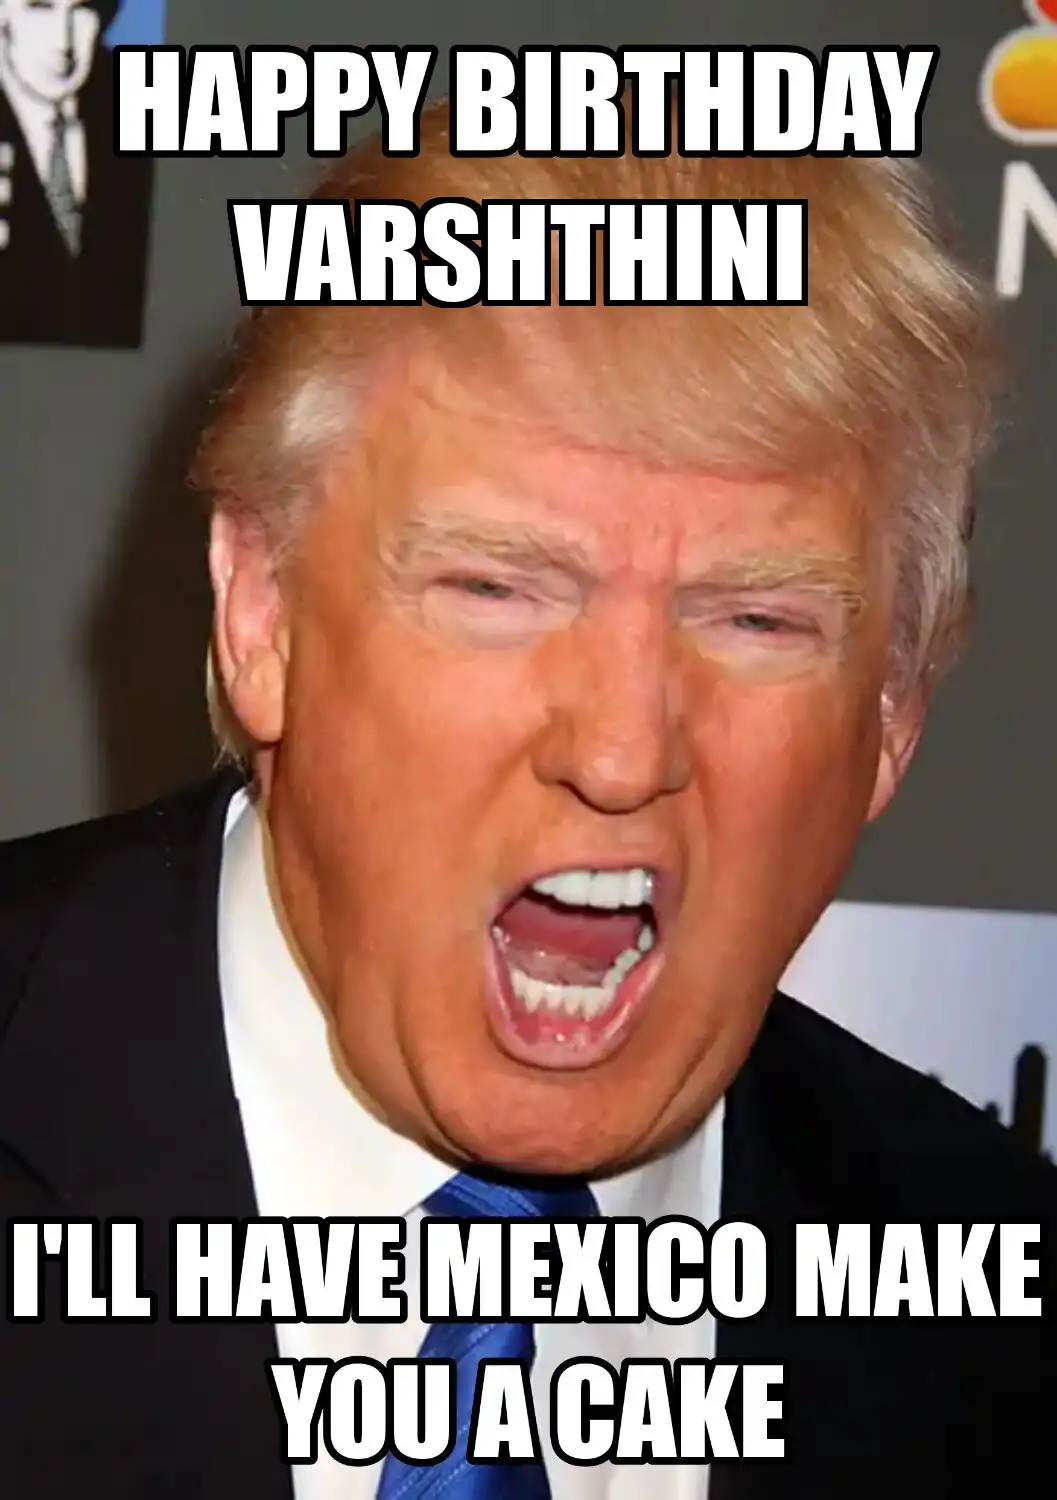 Happy Birthday Varshthini Mexico Make You A Cake Meme